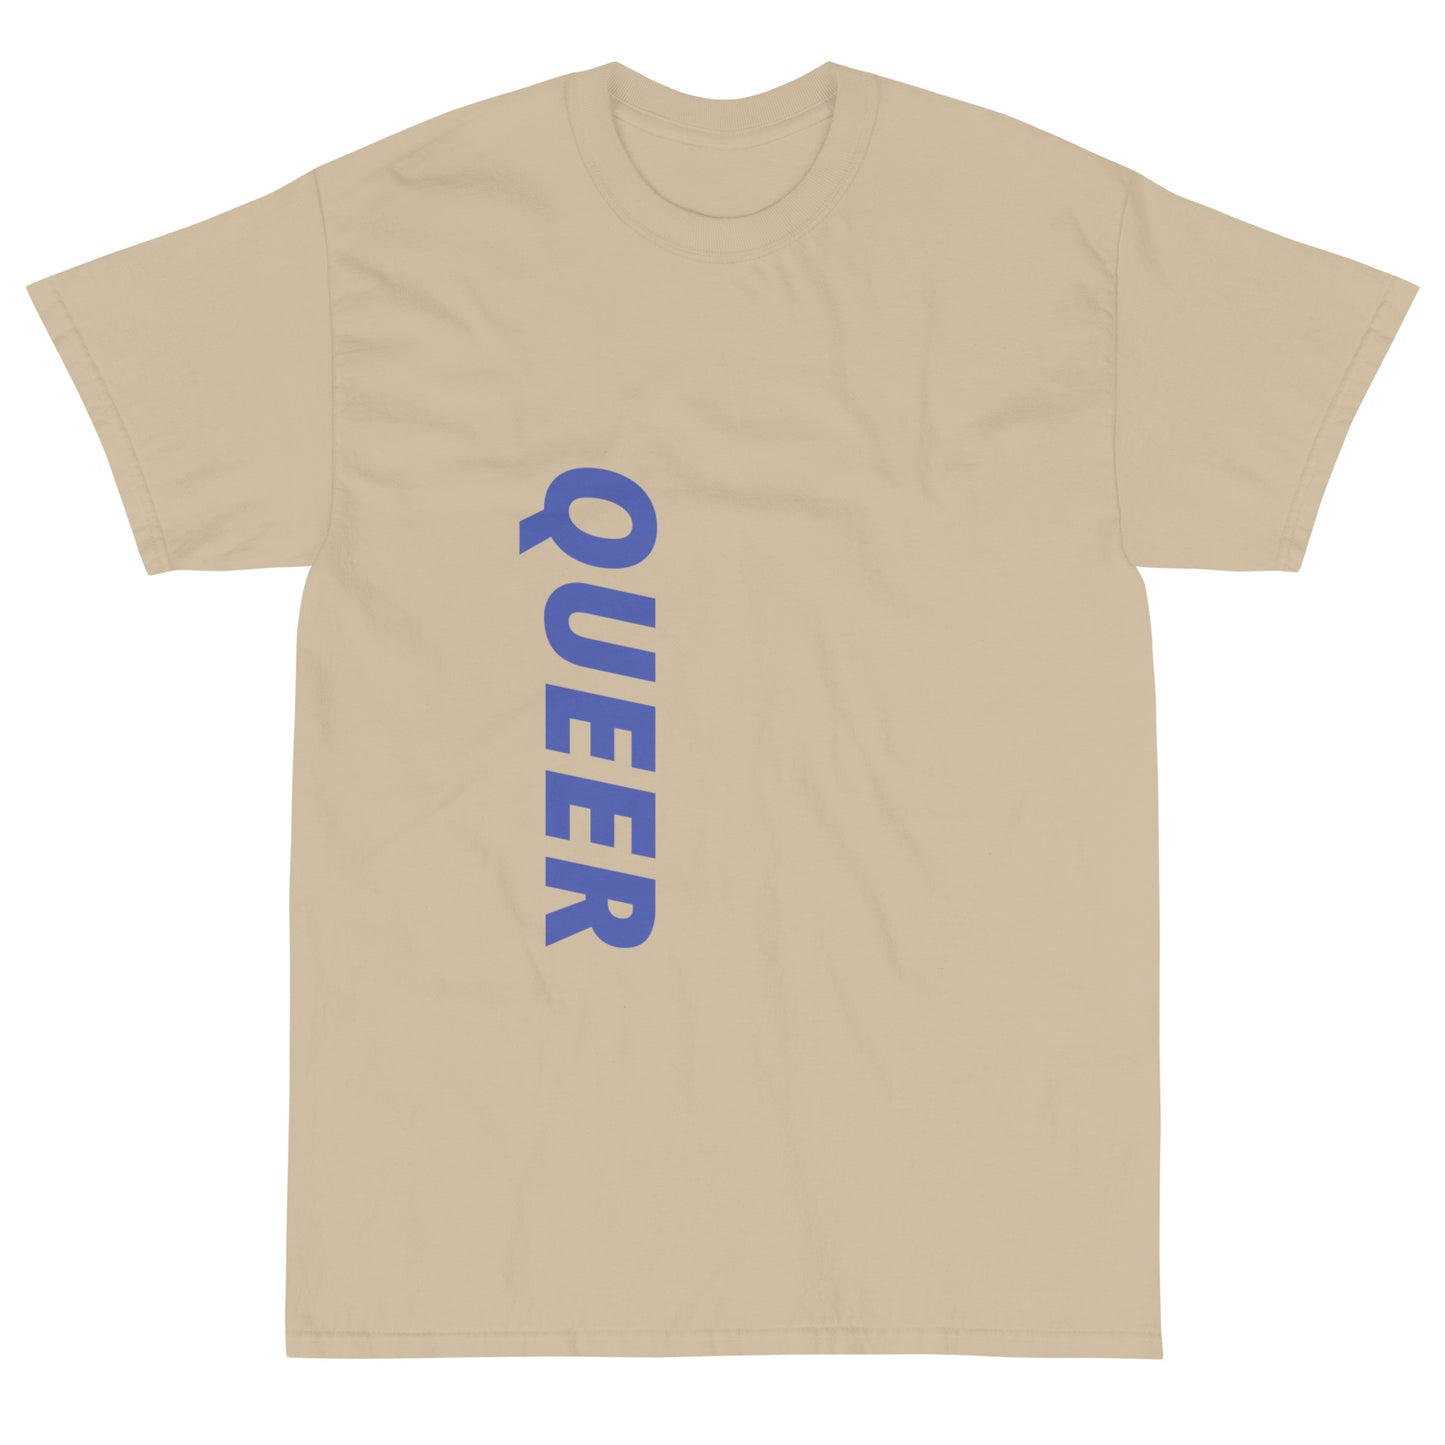 "Queer" Short Sleeve T-Shirt